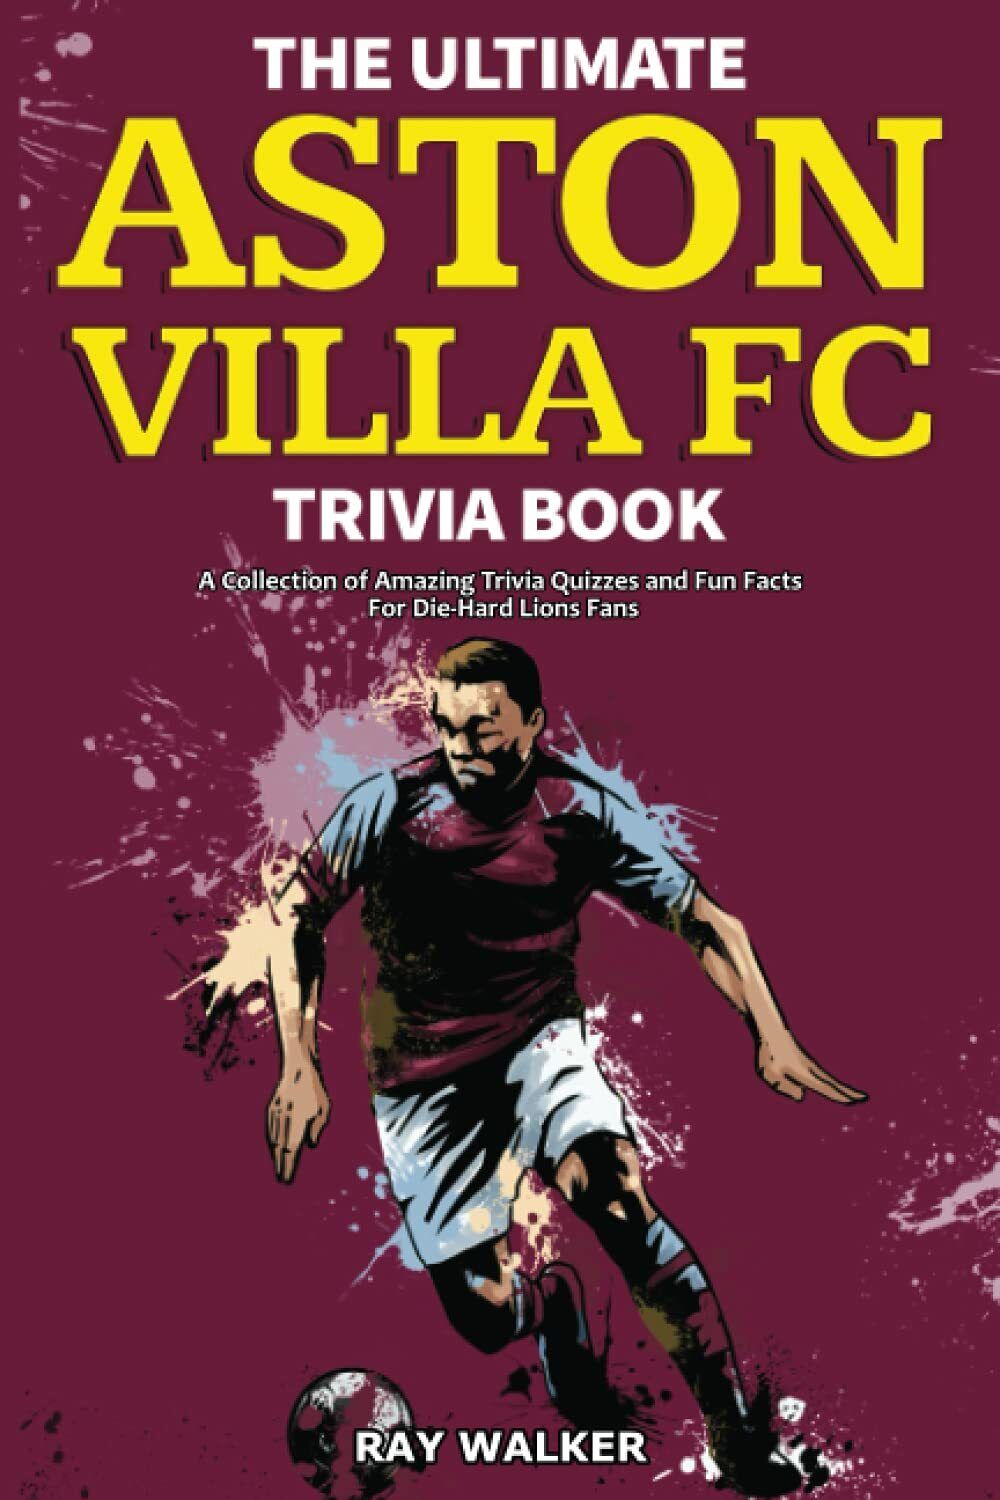 The Ultimate Aston Villa FC Trivia Book - Ray Walker - HRP House, 2021